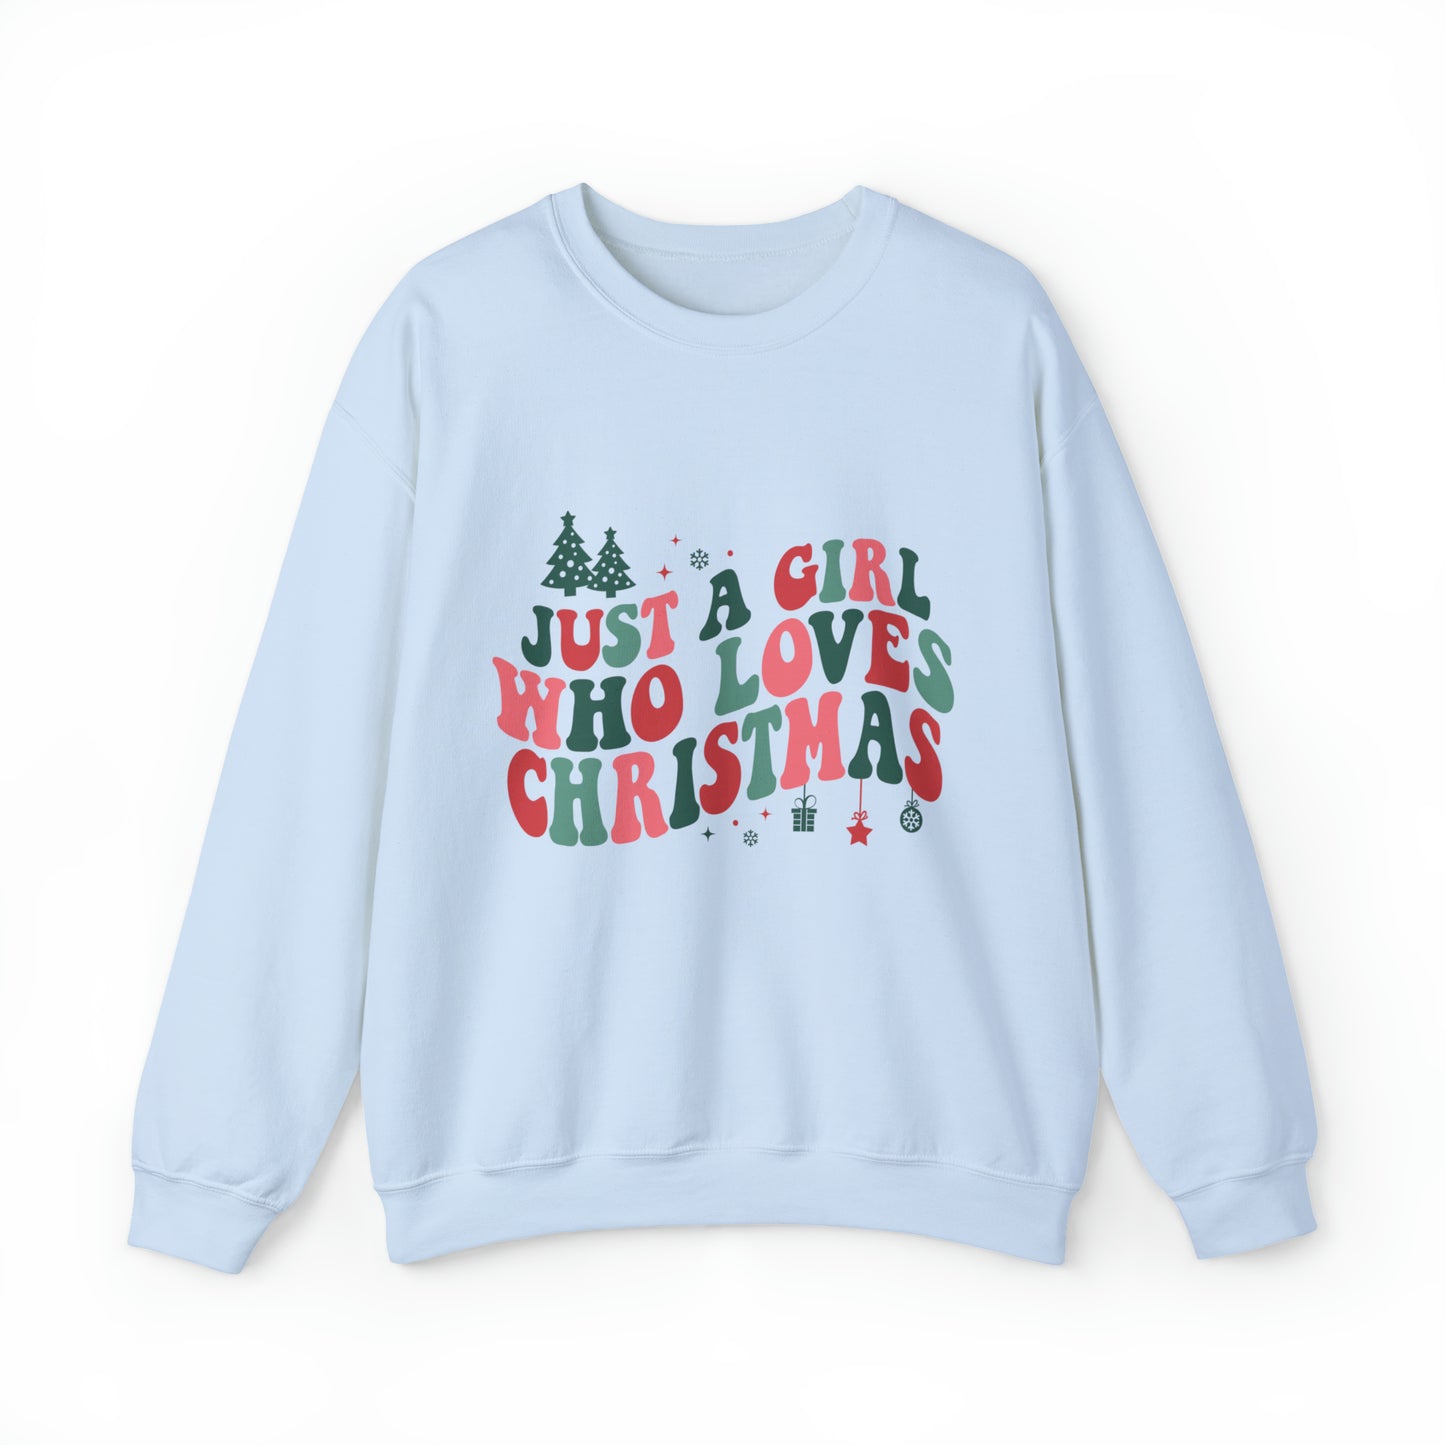 Just A Girl Who Loves Christmas Women's Christmas Crewneck Sweatshirt